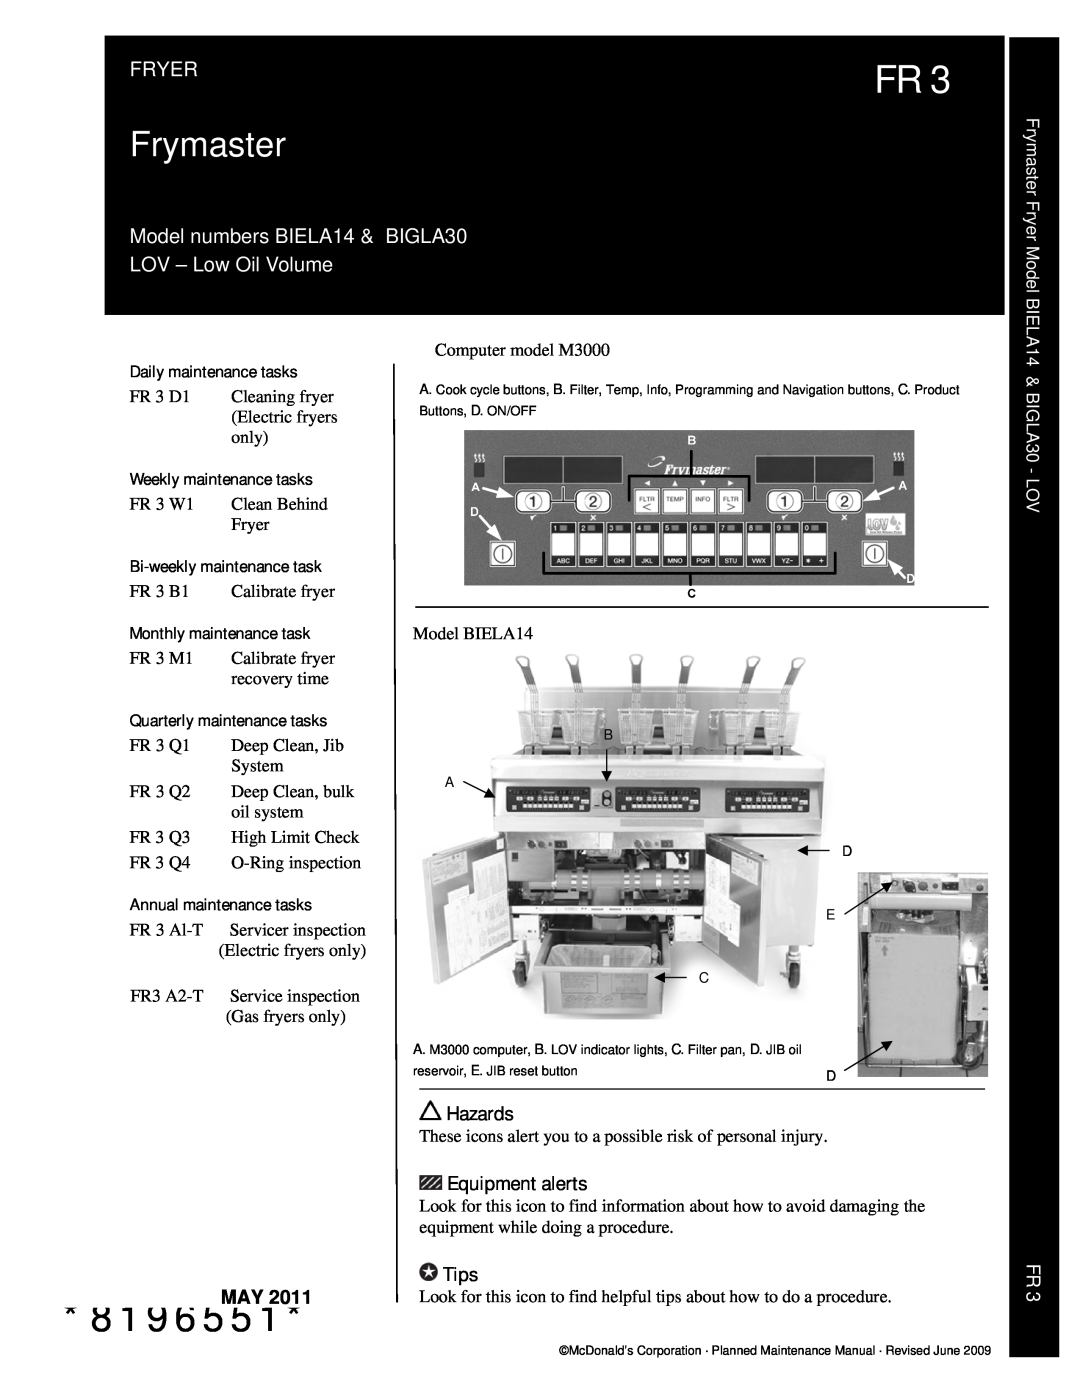 Frymaster warranty Operator’S Manual, FRYMASTER BIELA14 SERIES GEN II LOV, Electric Fryer, 8196442, For Your Safety 